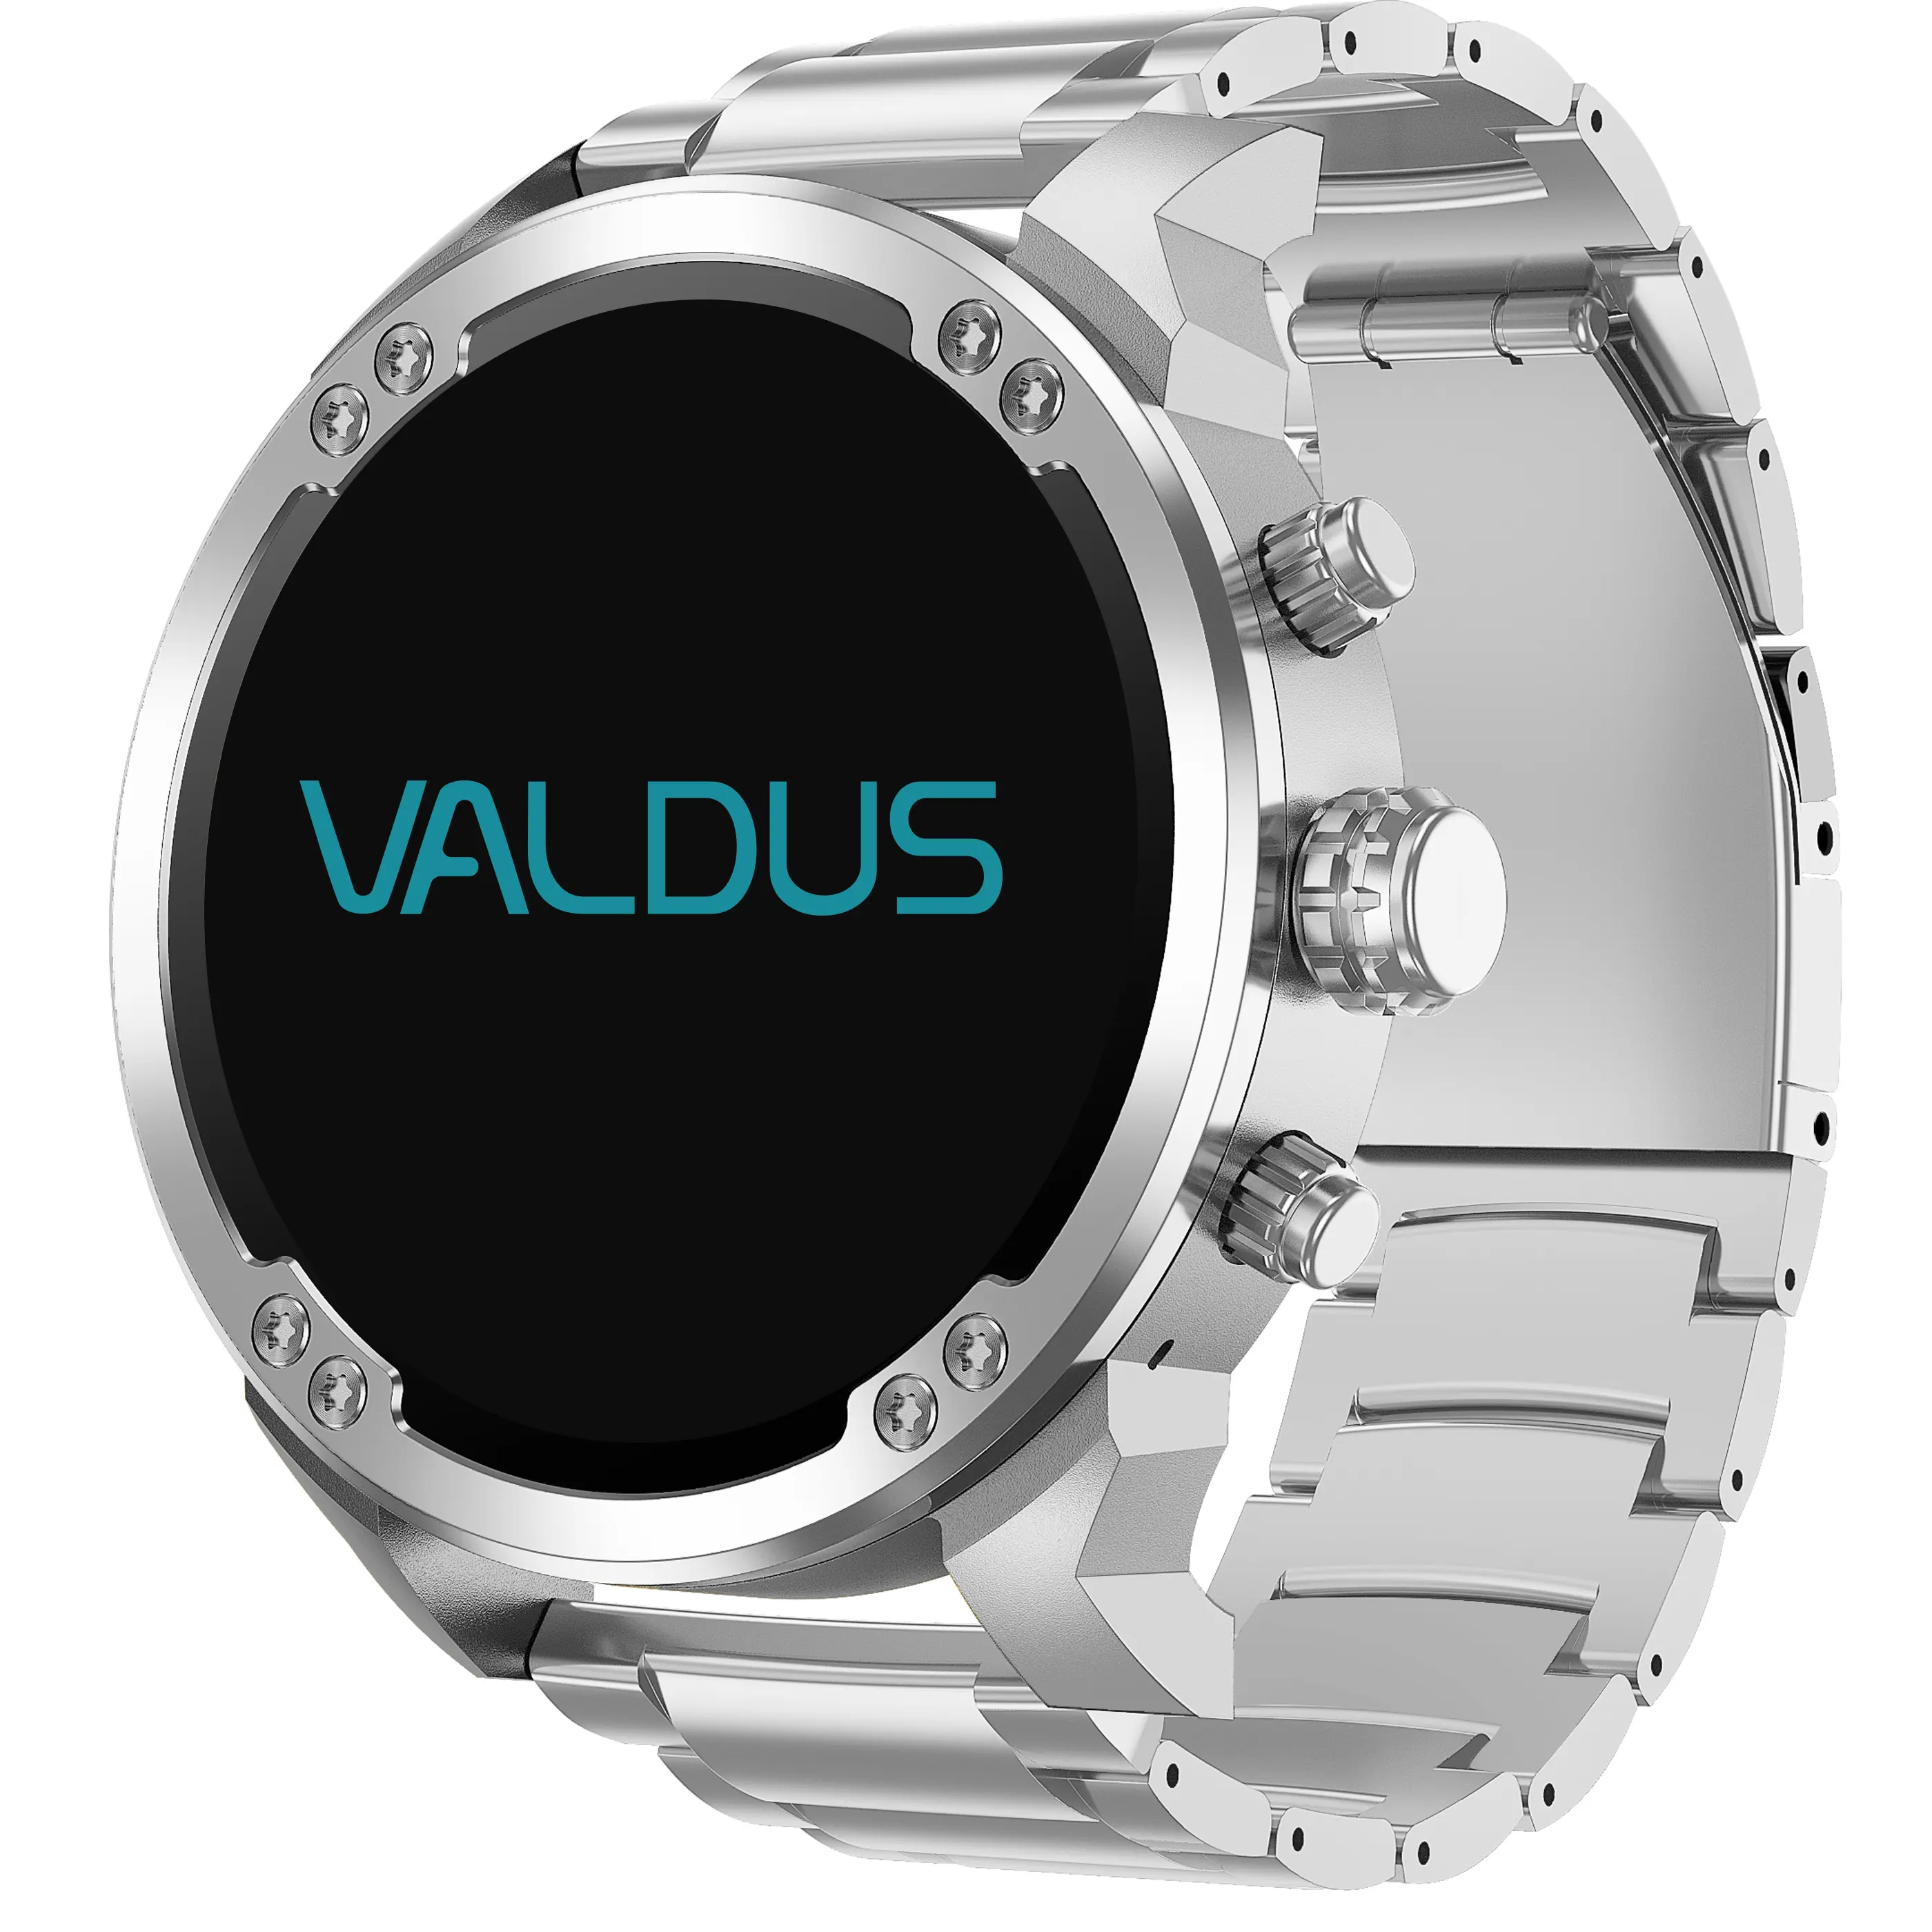 VALDUS 900 mAh סוללה גדולה תמיכת טעינה מגנטית פונקציית שינה IP68 שעון חכם תחזית מזג אוויר VS53 שעון חכם אופנה